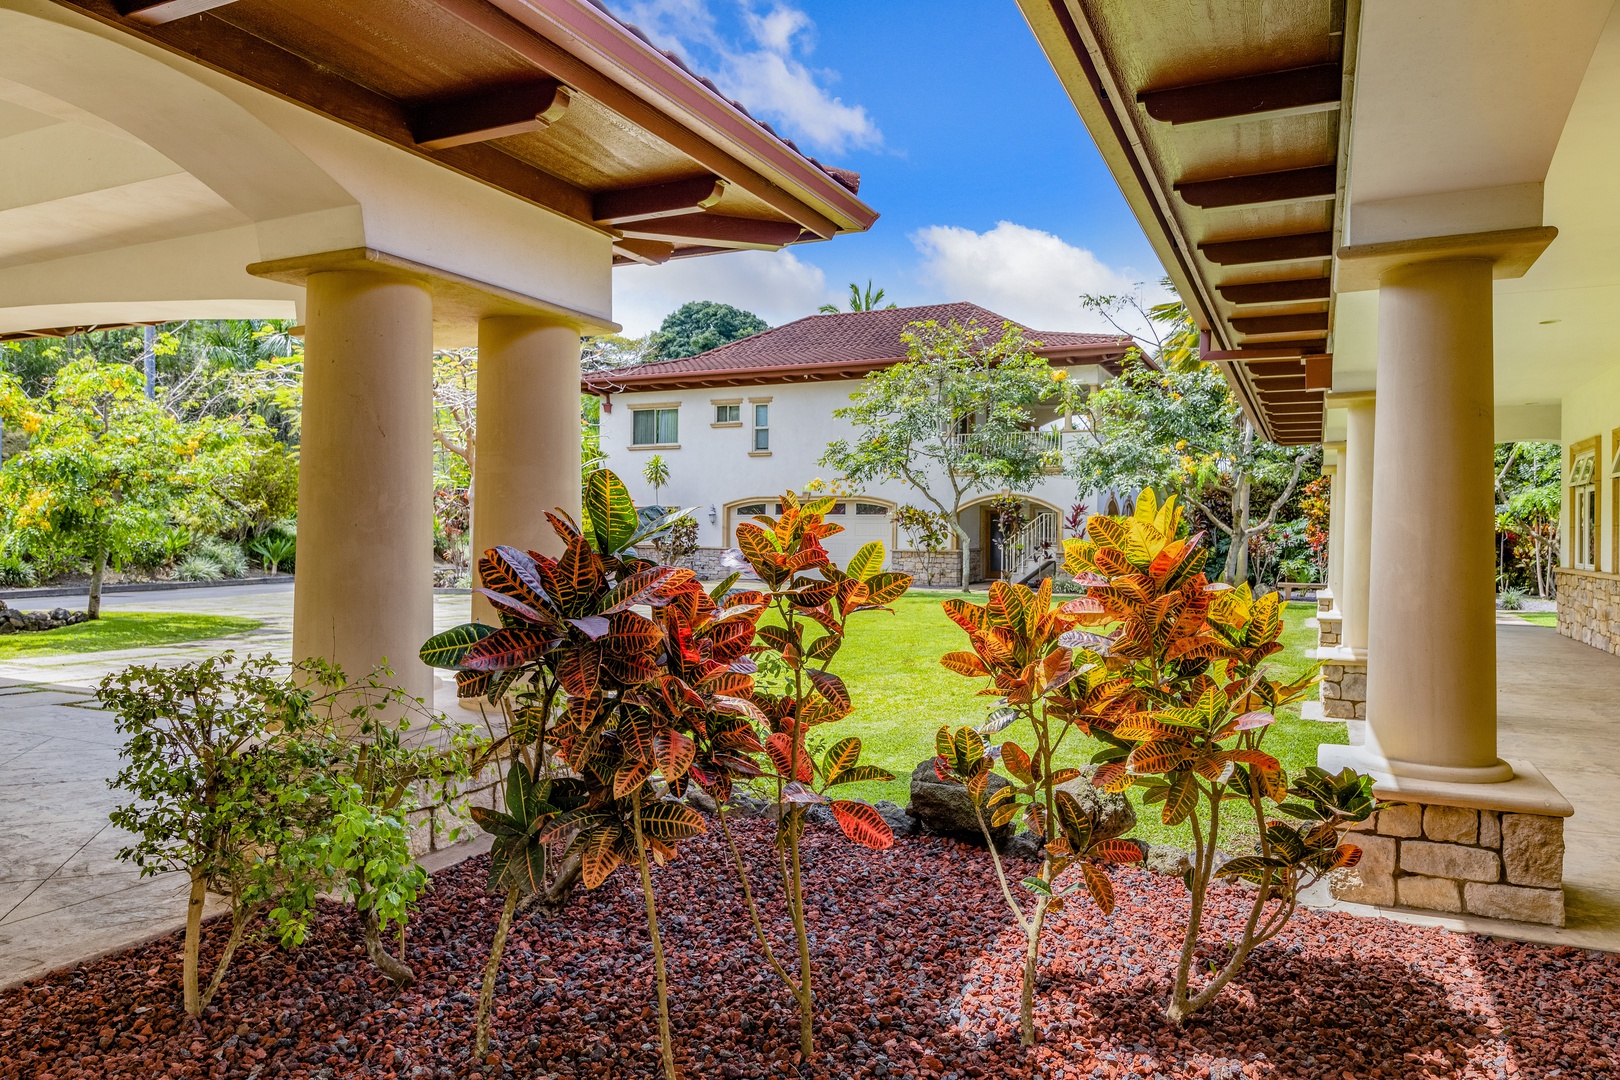 Kailua Kona Vacation Rentals, Kailua Kona Estate** - Tropical plants surround this lovely home.